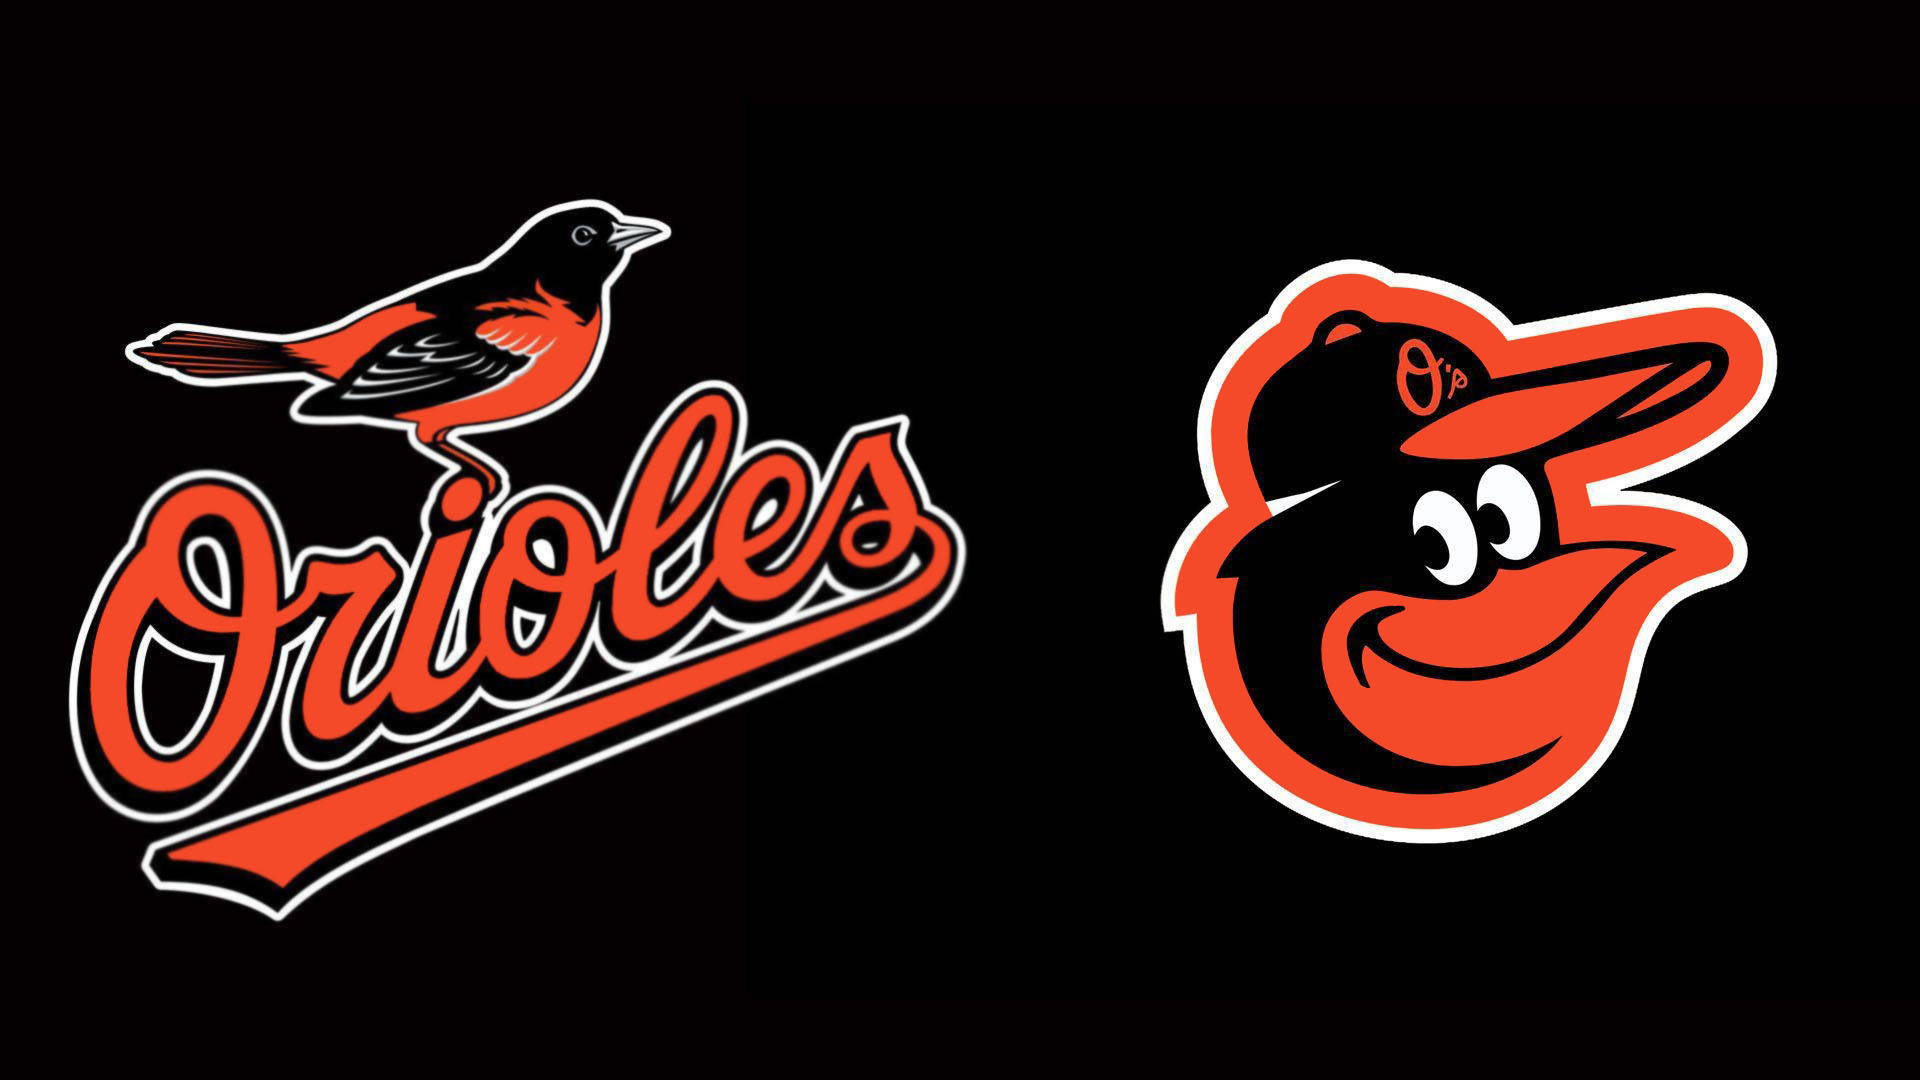 Baltimore Orioles Team Logos Background